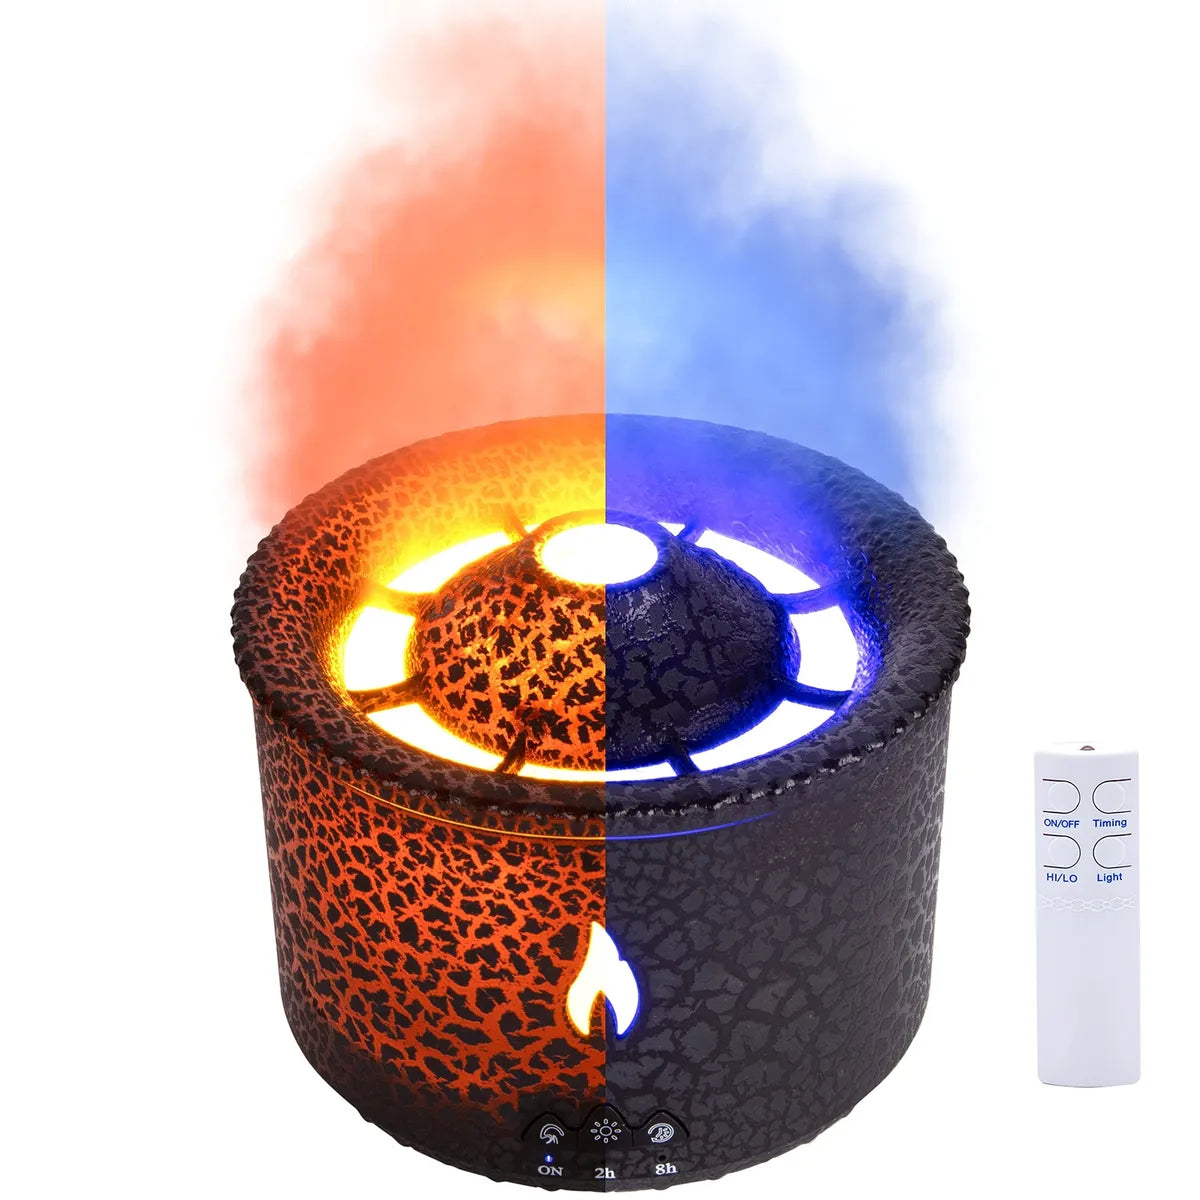 Kinscoter Volcanic Flame Aroma Diffuser - Ledexor